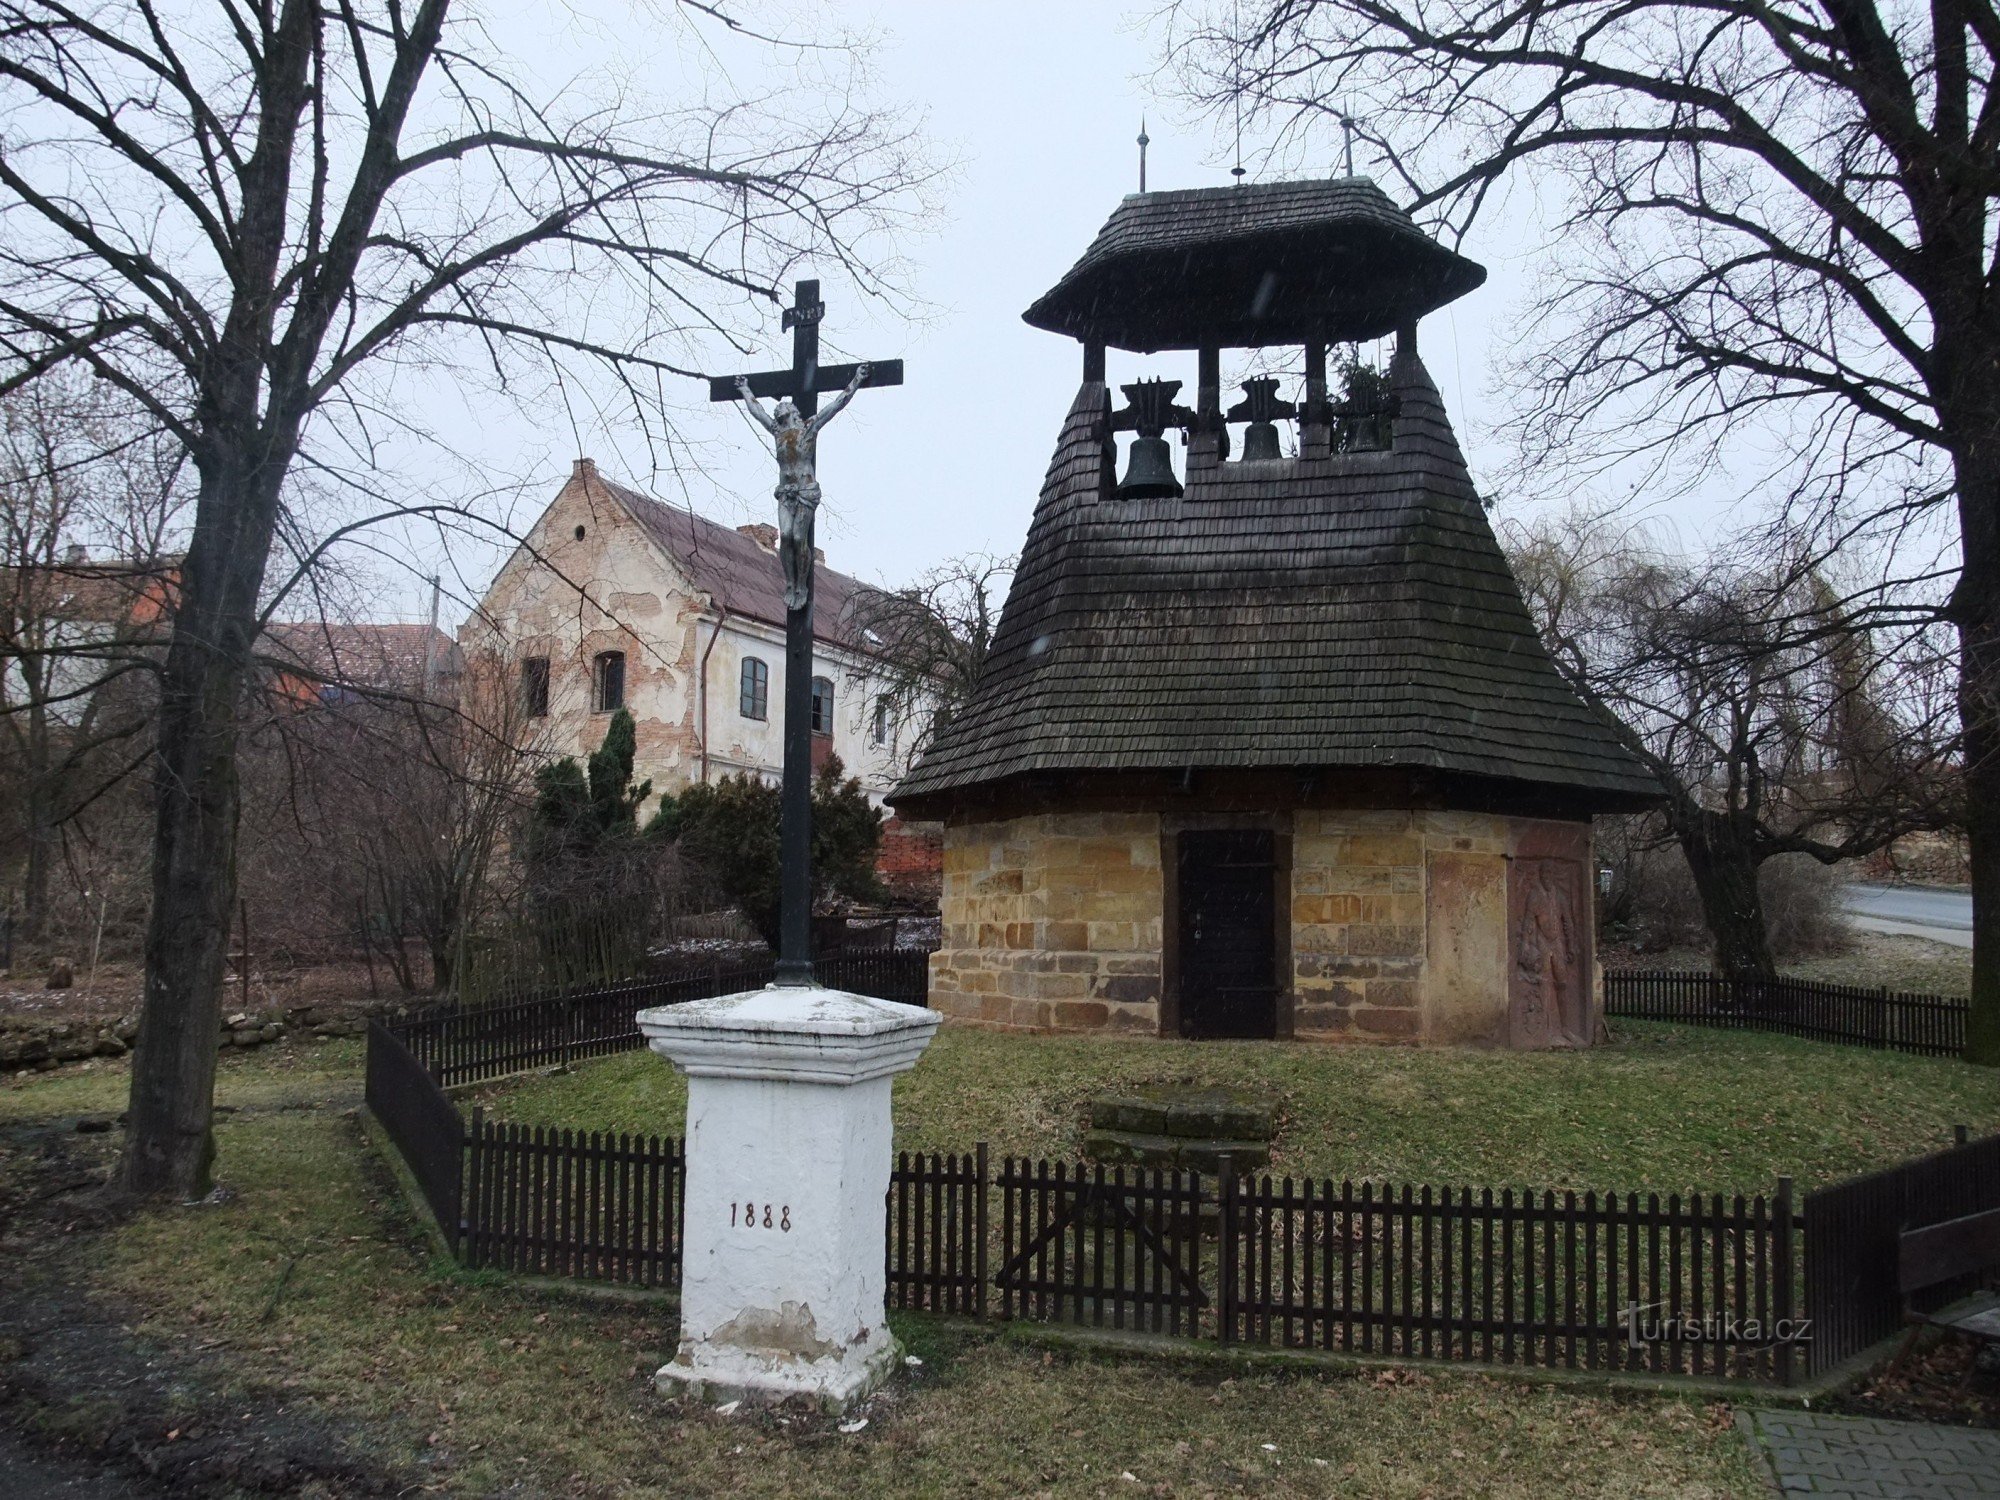 Glockenturm in Neprobylice